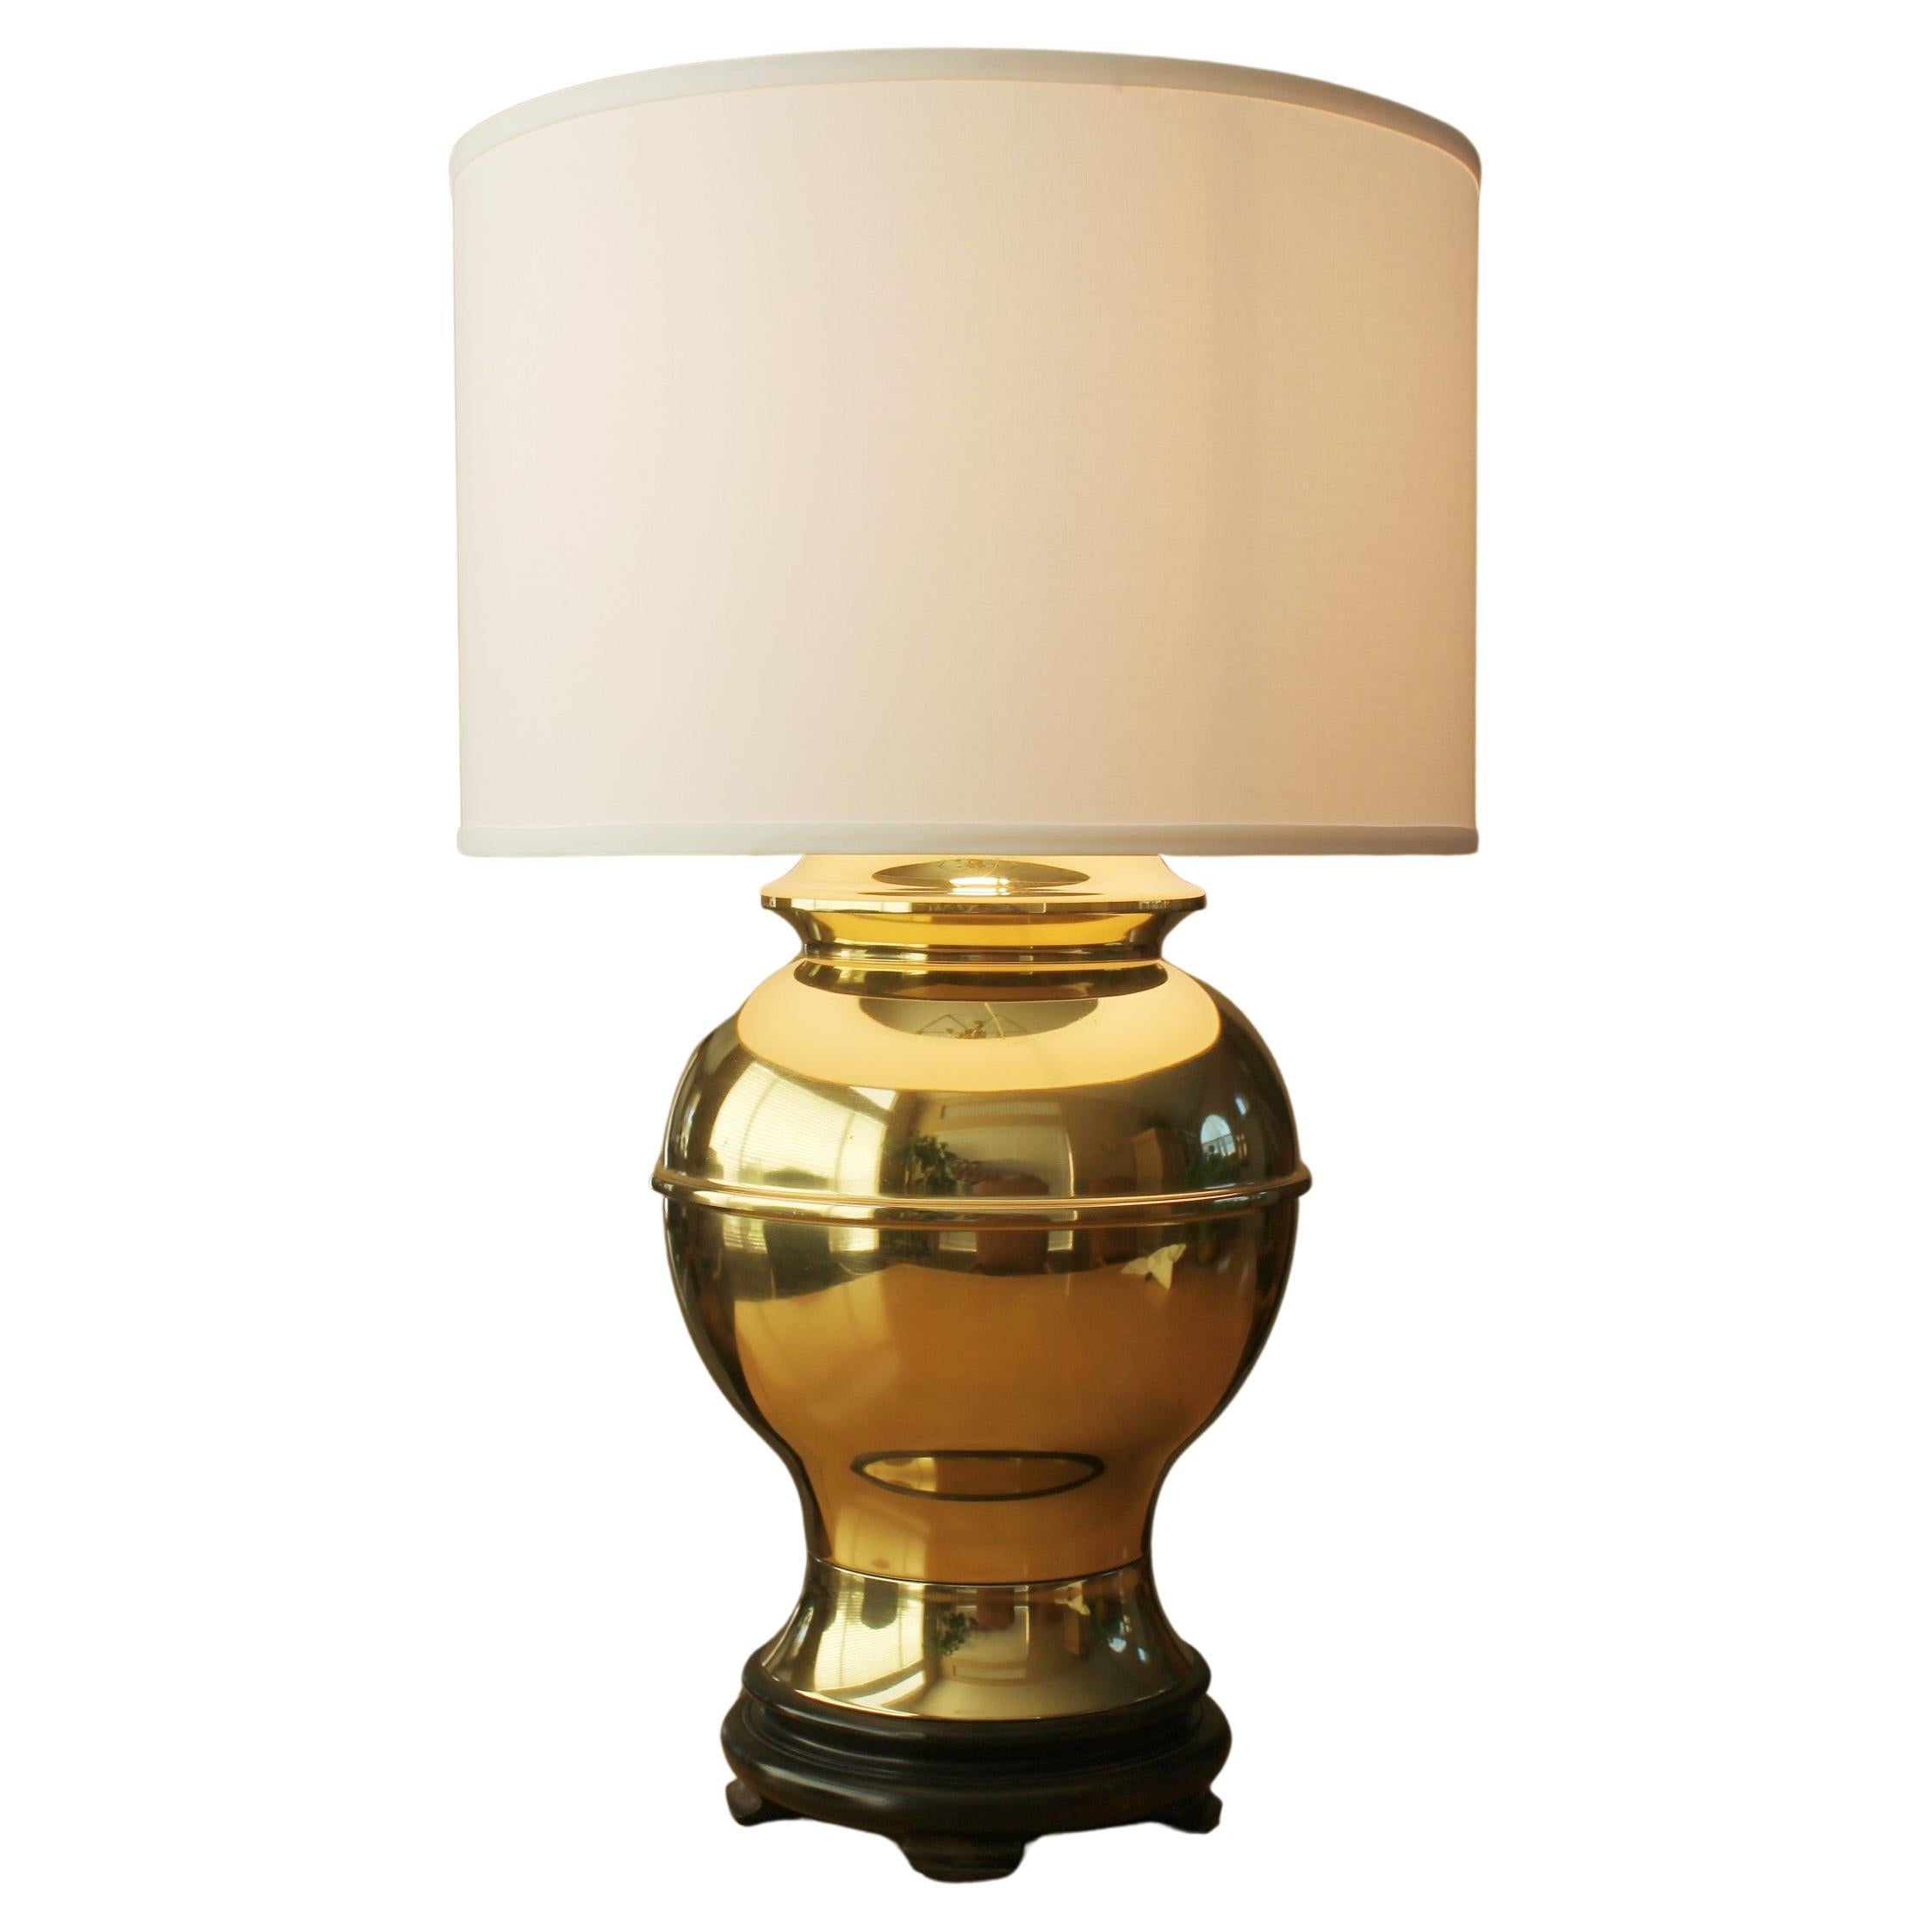 Gorgeous Monumental Brass Ginger Jar Table Lamp! 1980s Cooper Karl Springer Era For Sale